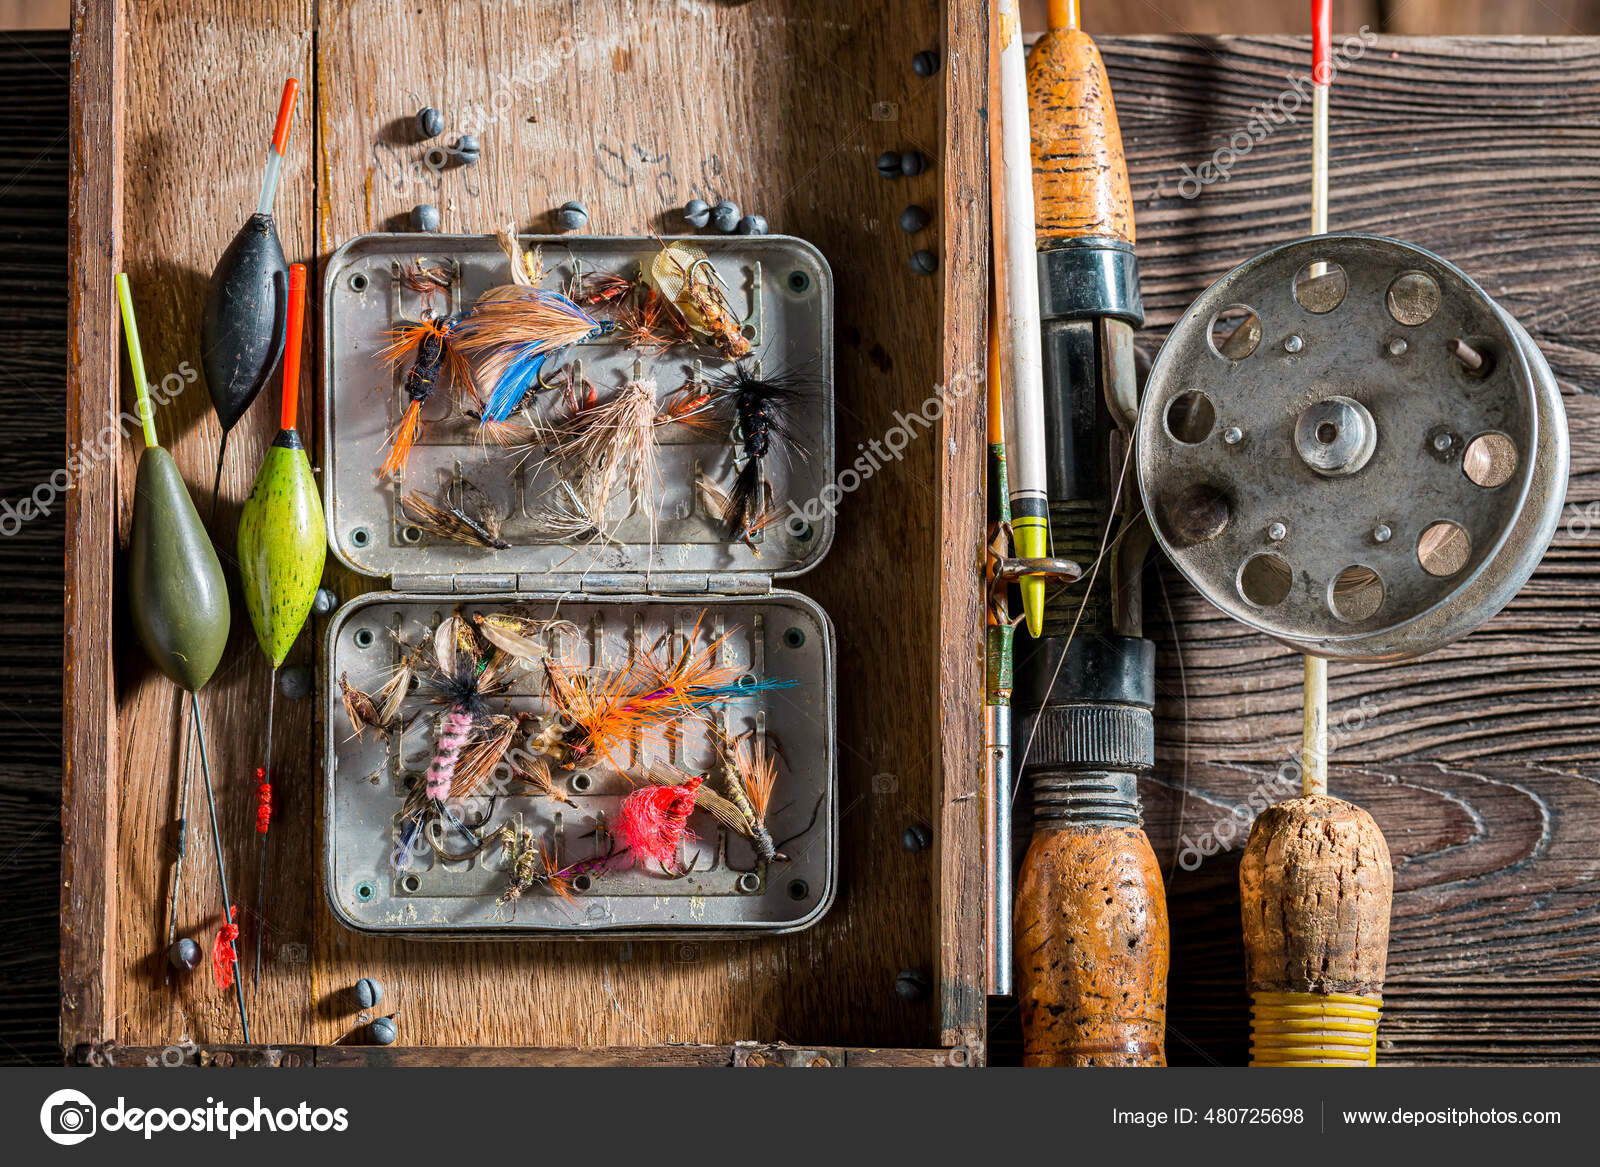 Old Stuff Angler Flies Rods Fishing Equipment Old Wooden Workshop